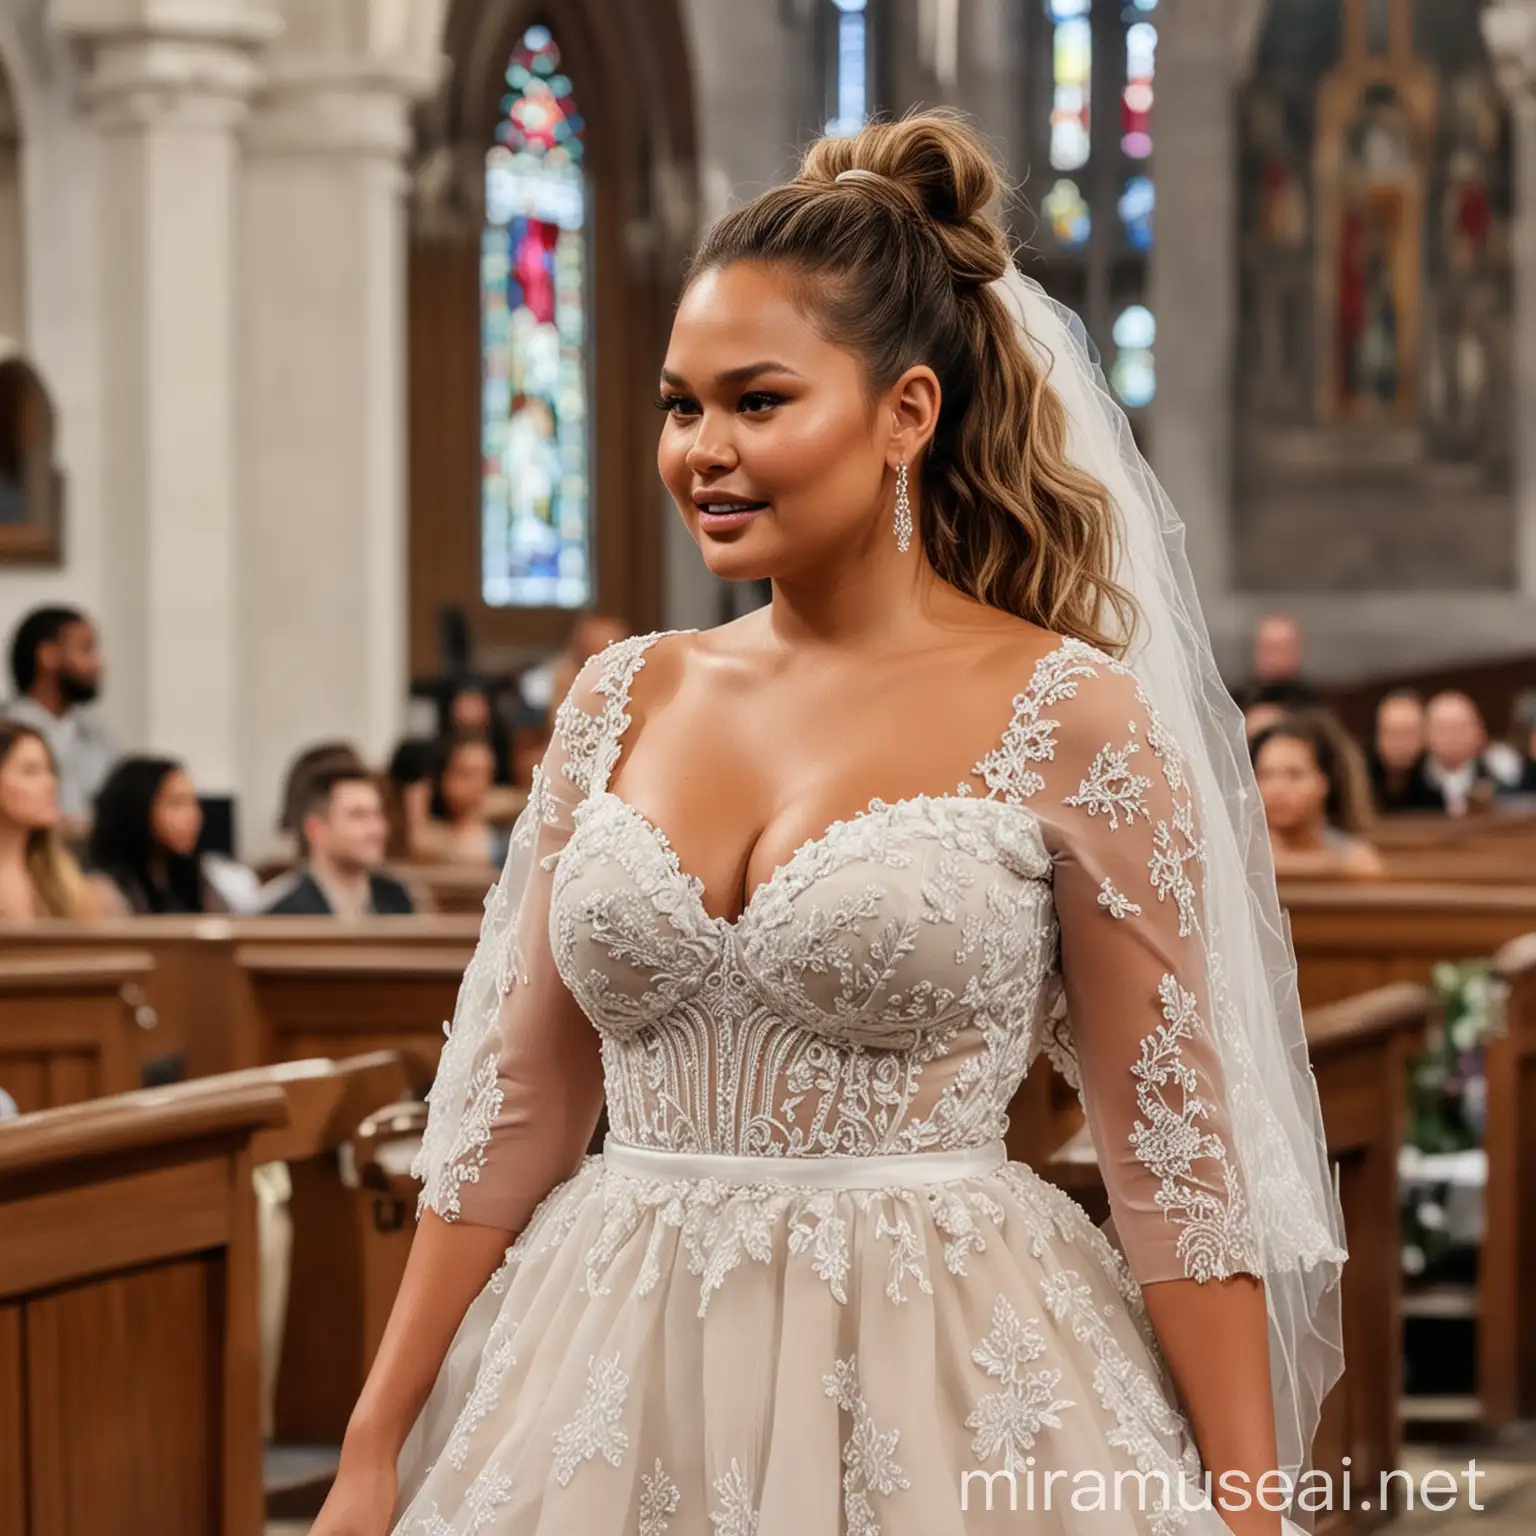 Chrissy Teigen Short Wedding Dress Church Portrait